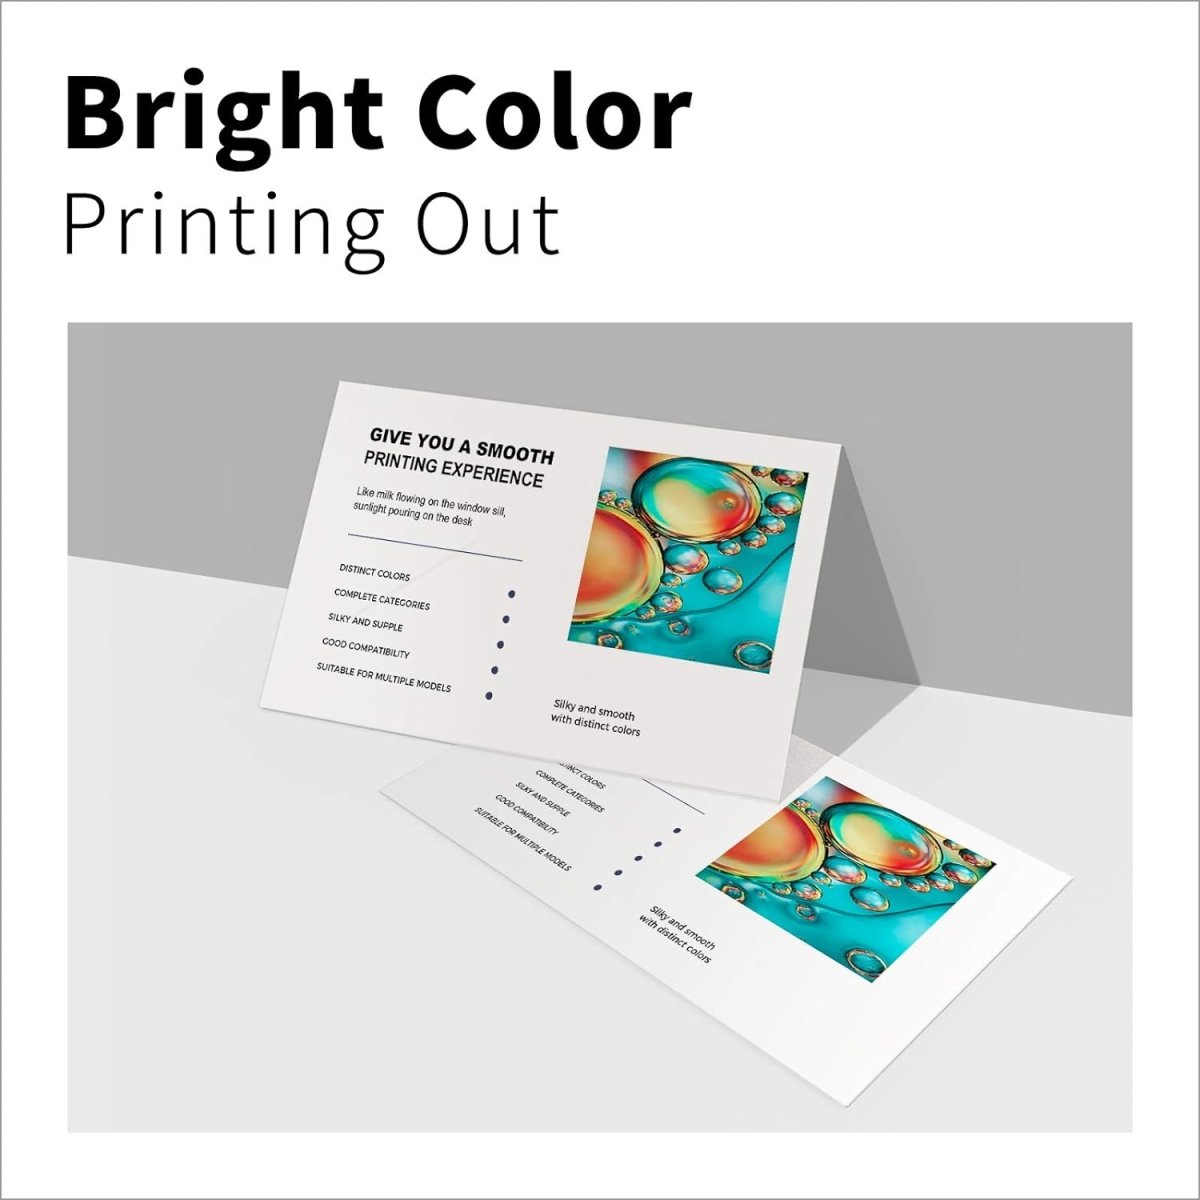 65XL Ink Cartridges for HP Printer, Tri-Color 1-PK - Linford Office:Printer Ink & Toner Cartridge